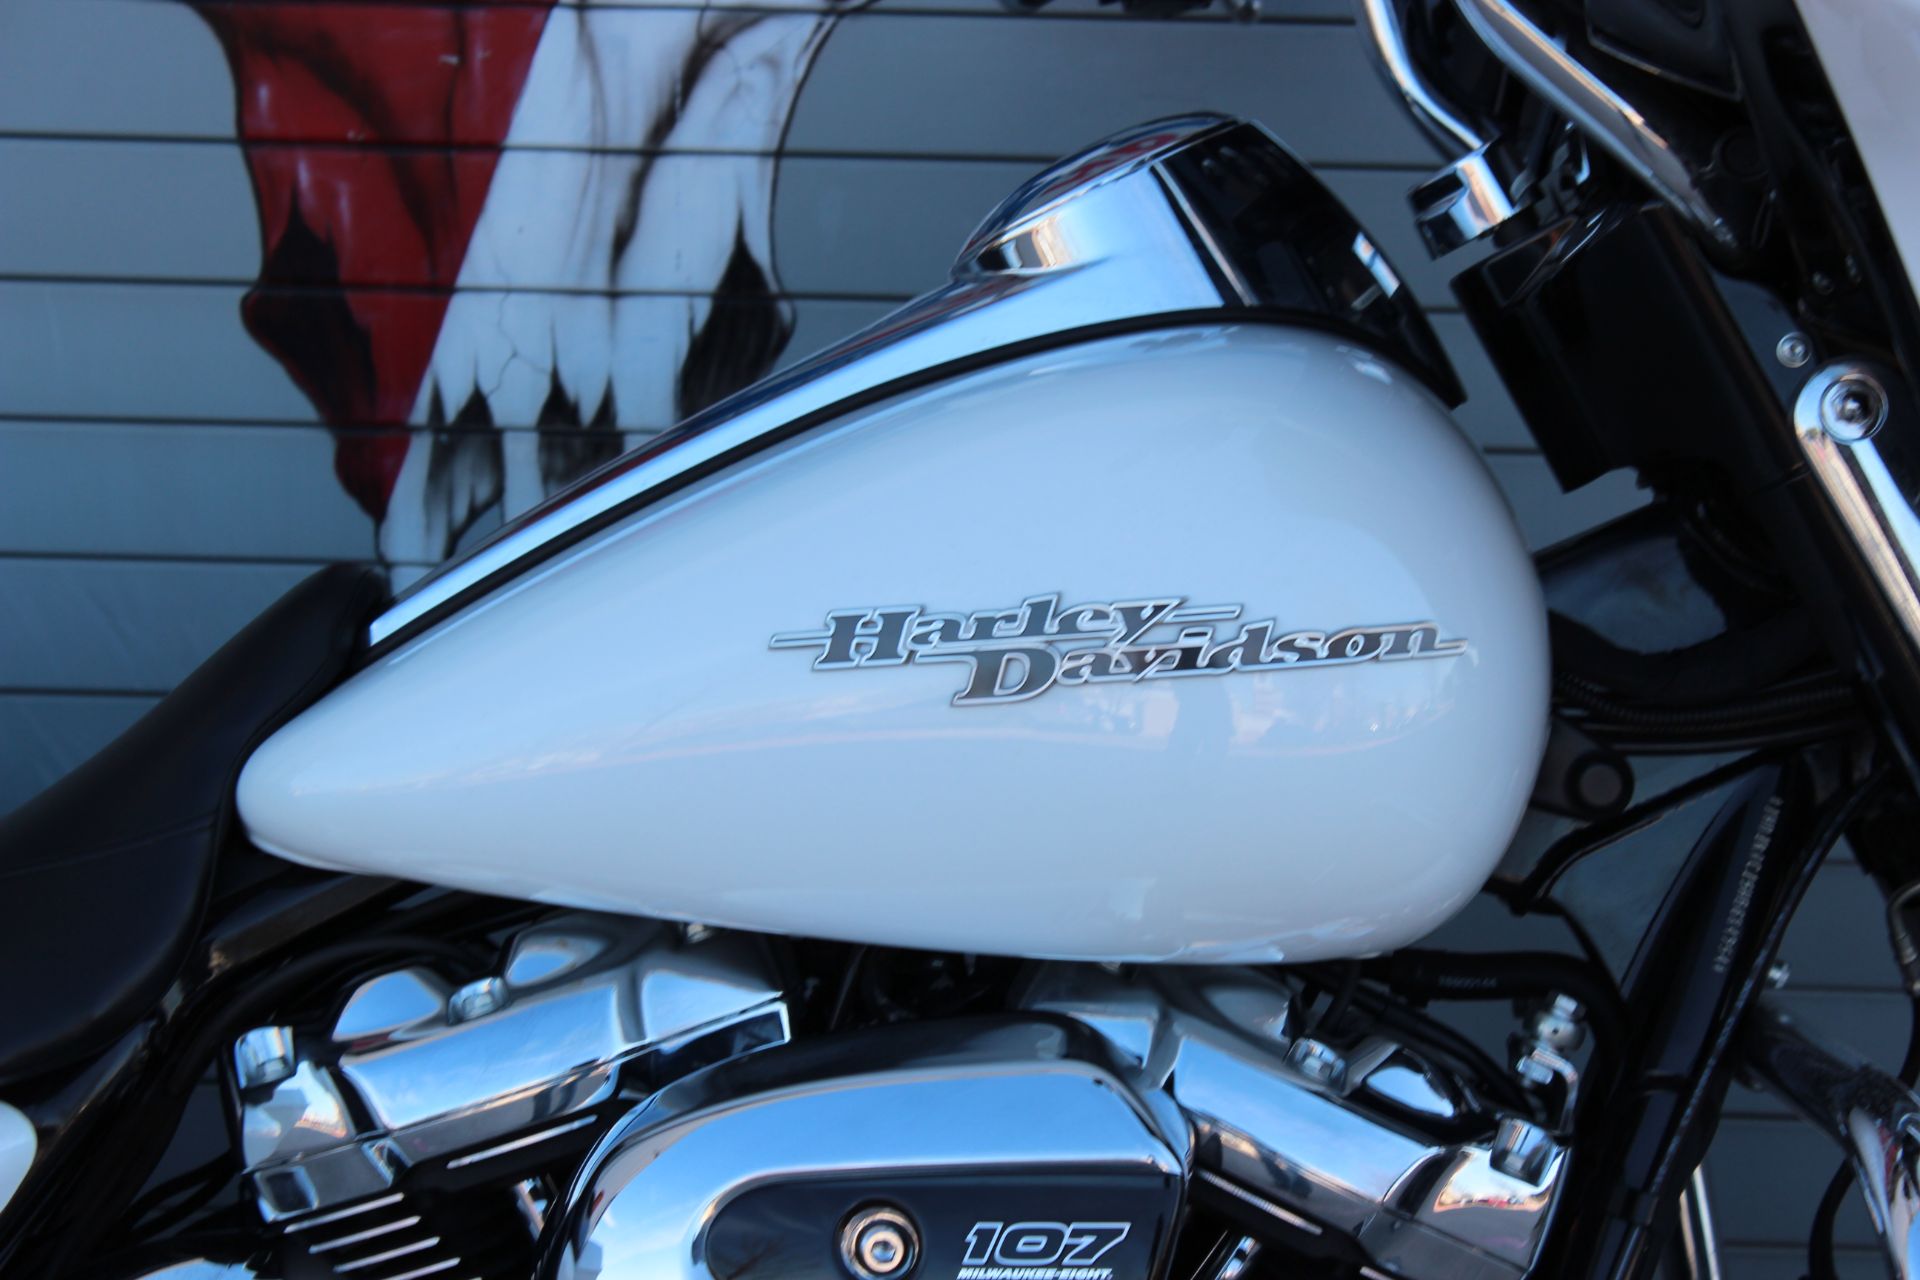 2017 Harley-Davidson Street Glide® Special in Grand Prairie, Texas - Photo 6